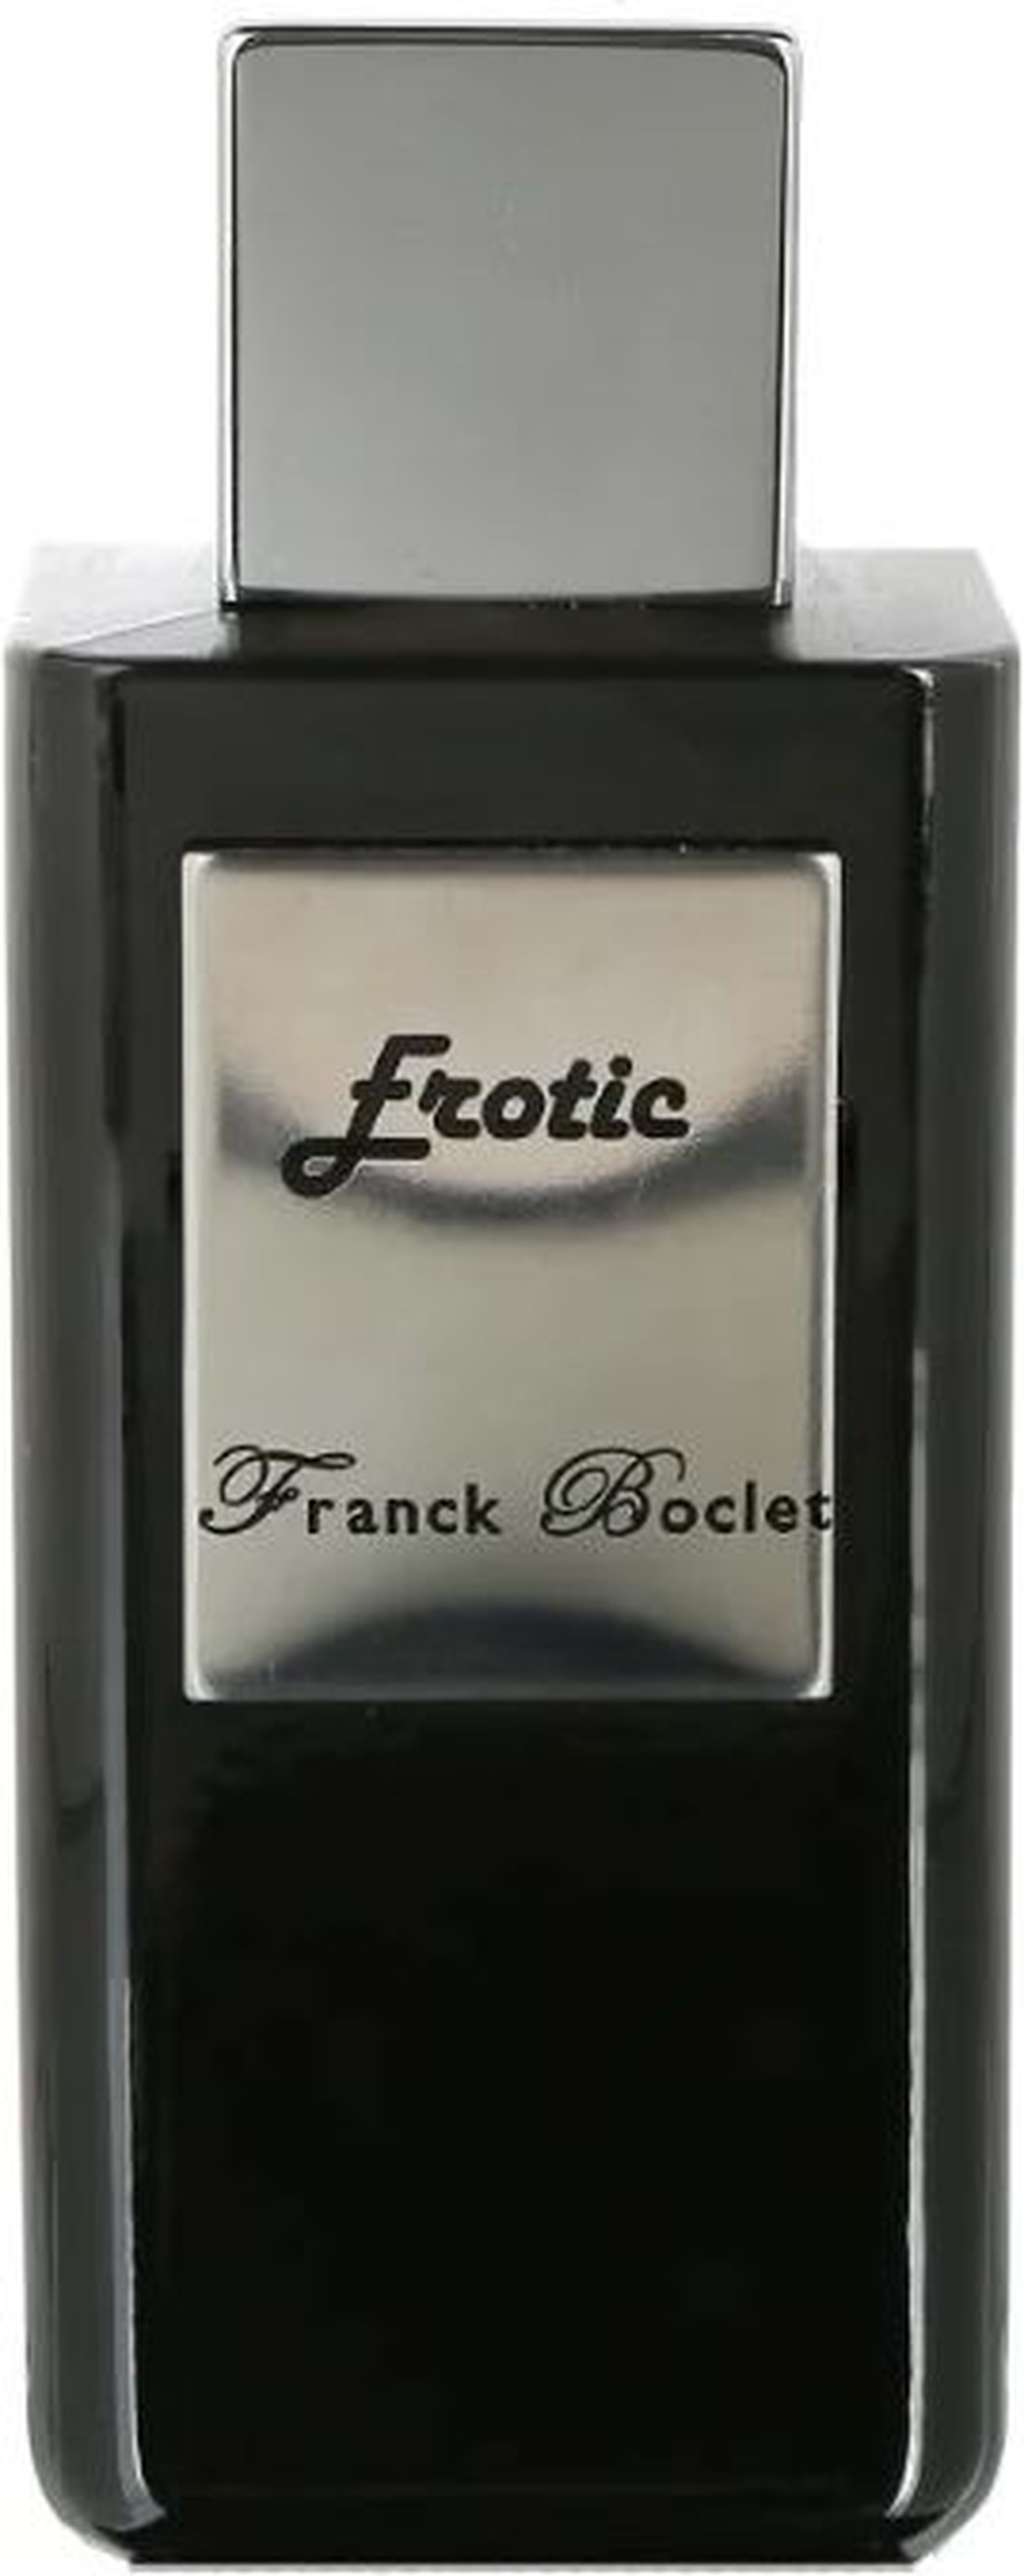 Парфюмерная вода Franck Boclet Erotic U Edp 100 ml (унисекс) фото